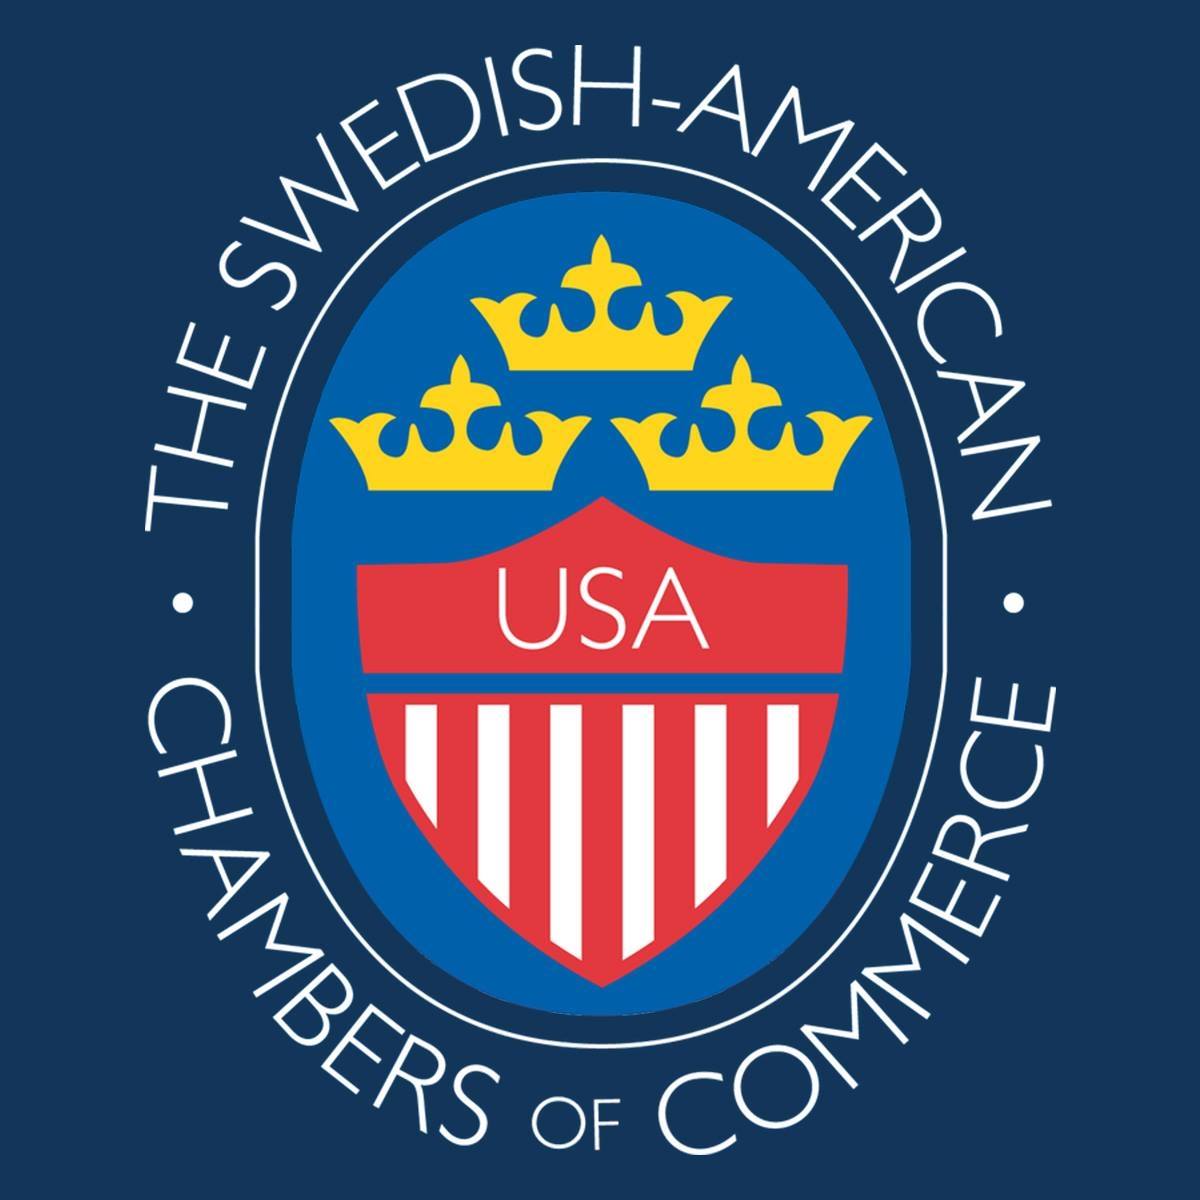 Swedish American Chambers of Commerce